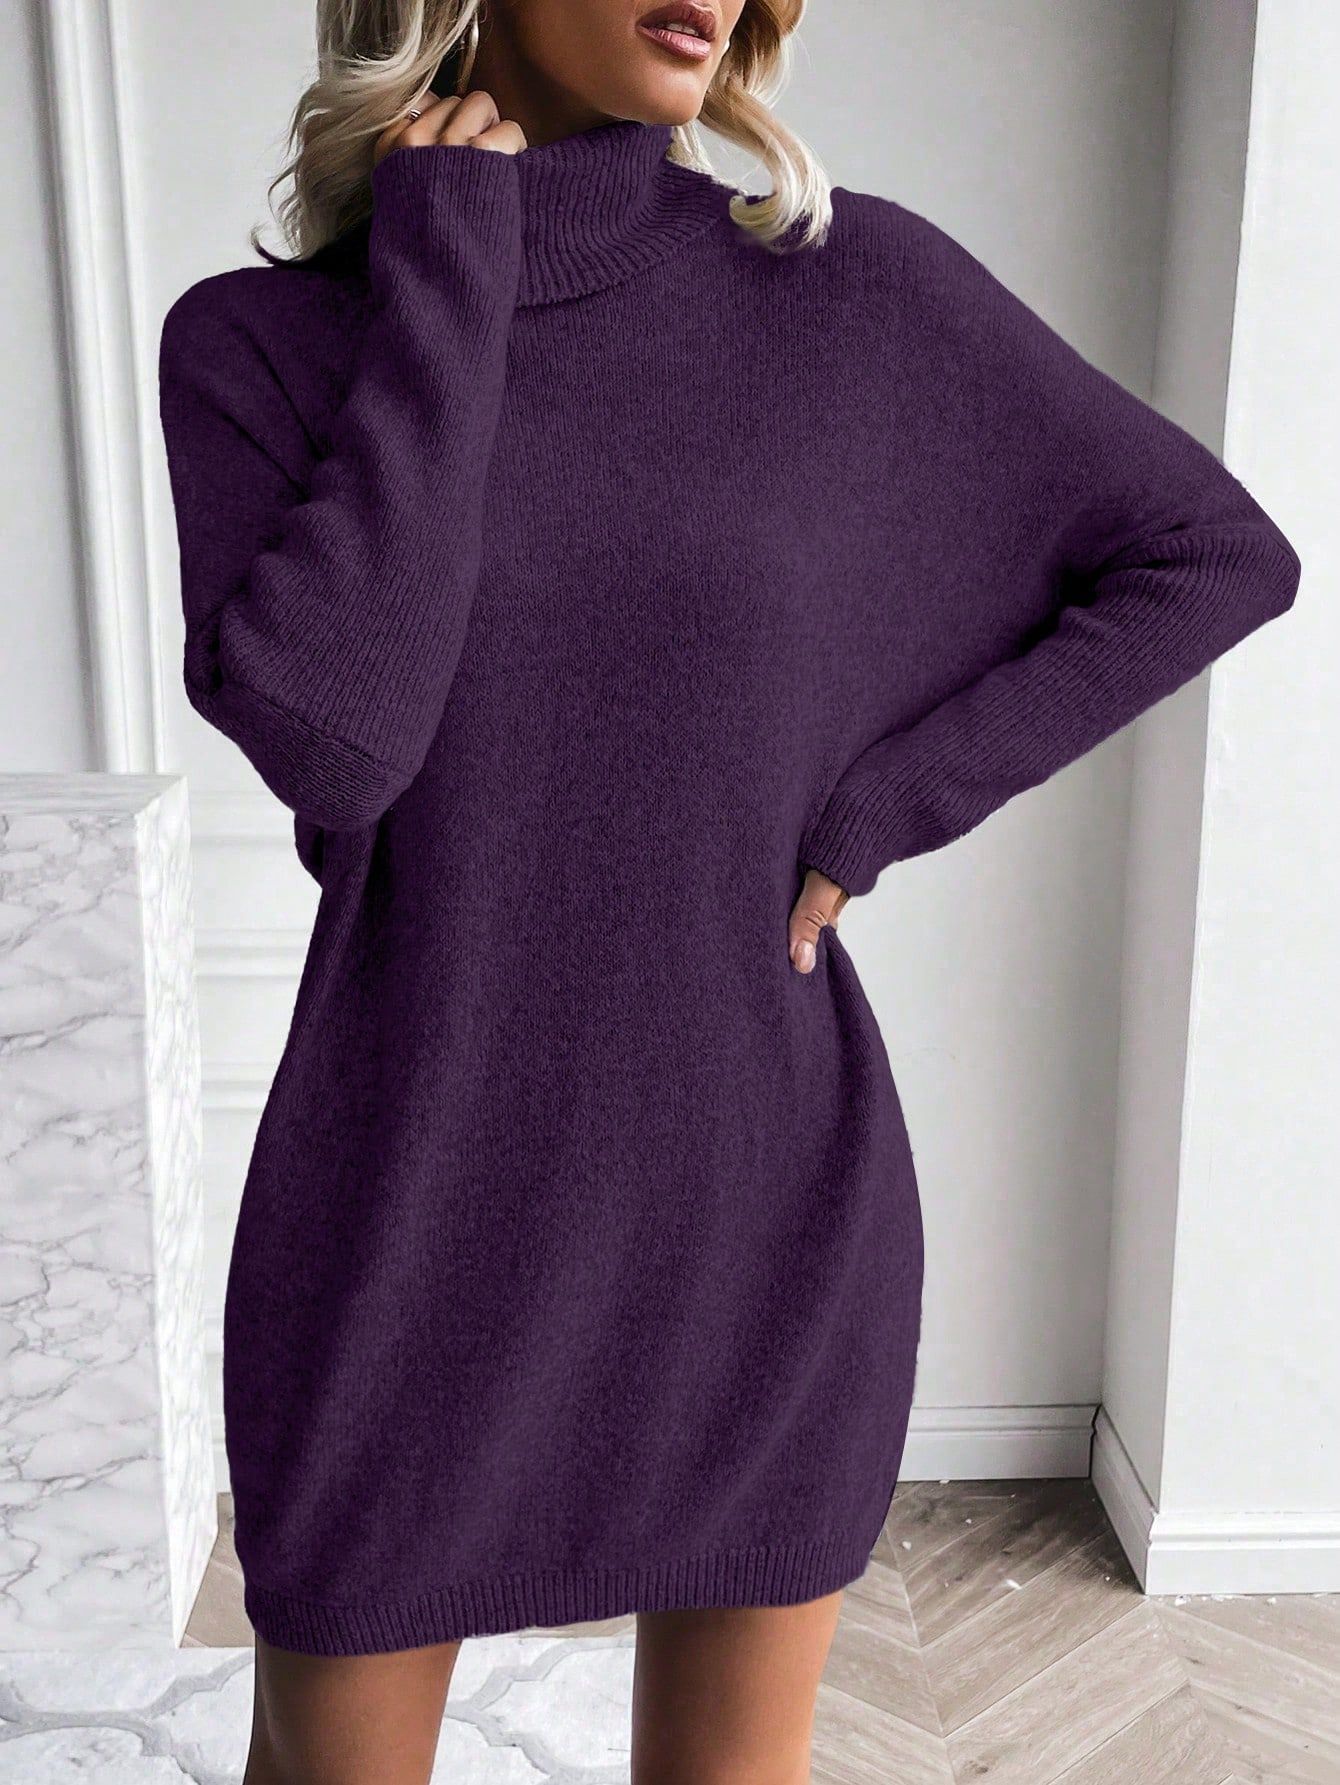 SHEIN LUNE Women's High Neck Batwing Sleeve Sweater Dress | SHEIN